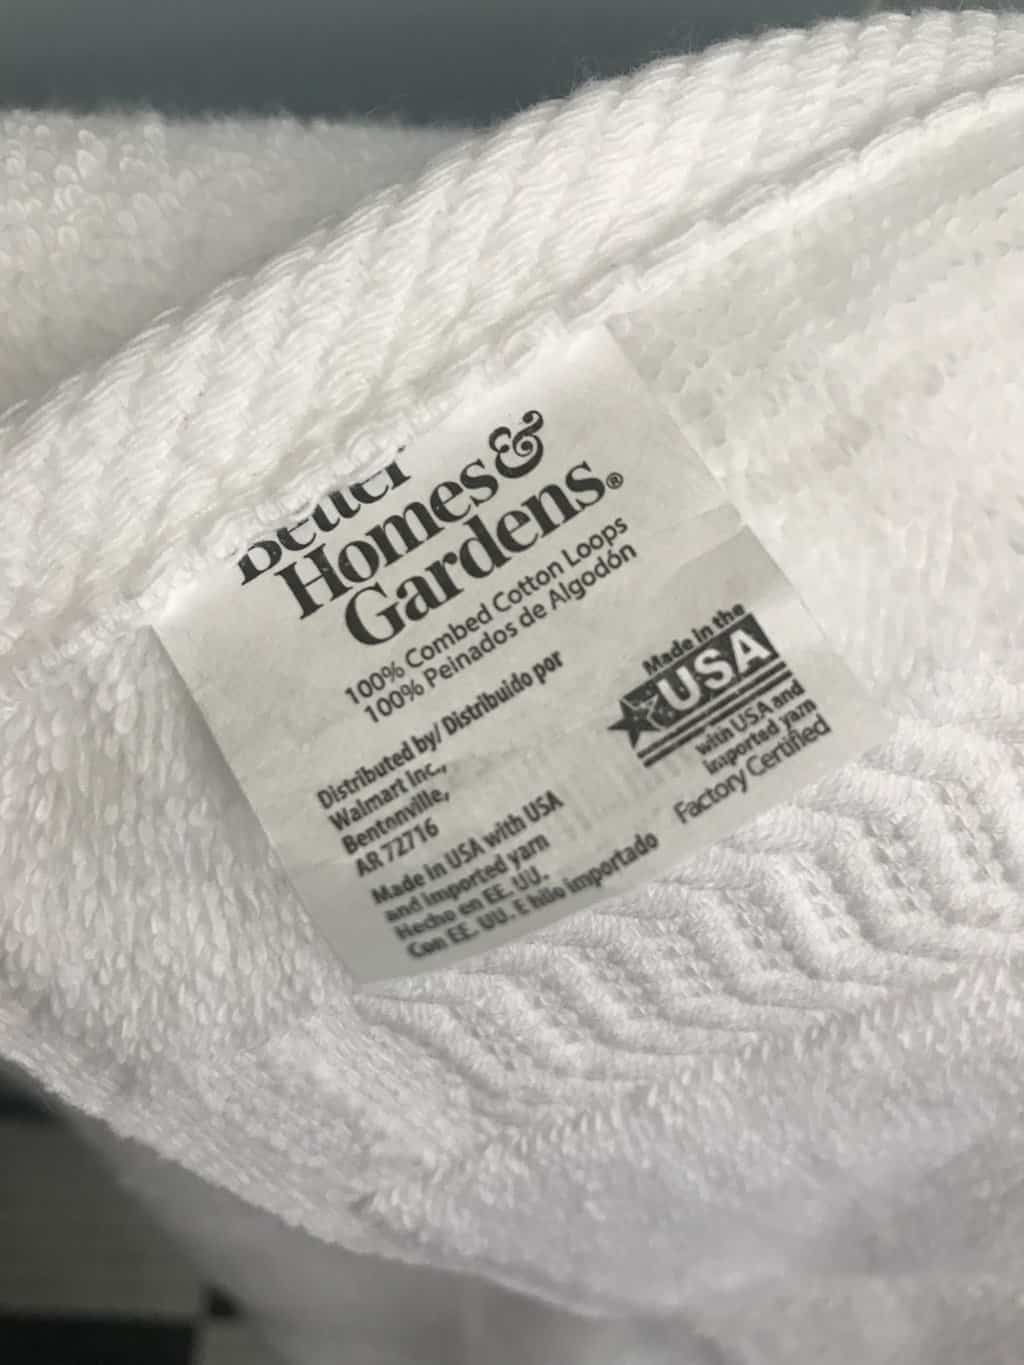 Better Homes & Gardens Towel Set Towels